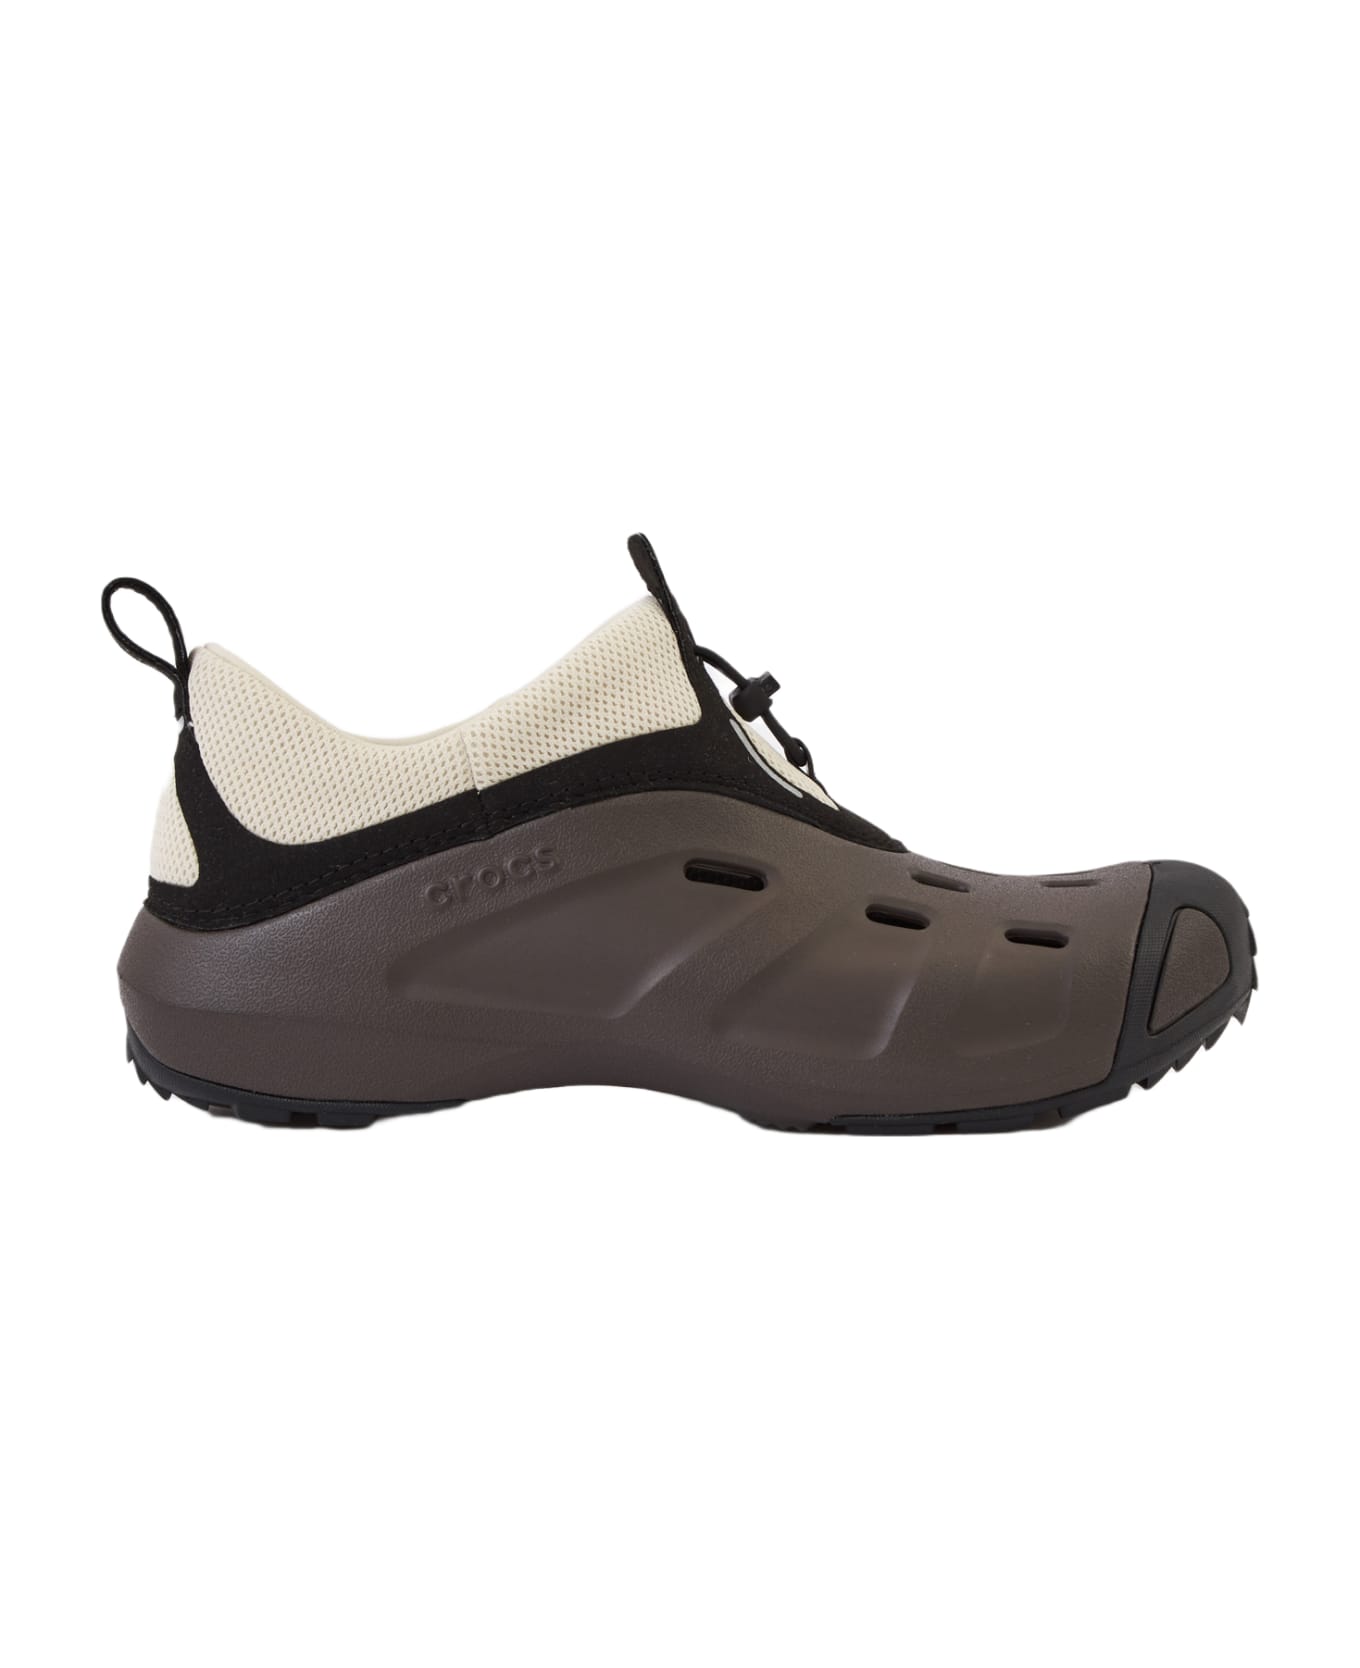 Crocs Quick Trail Low Shoes - brown スニーカー